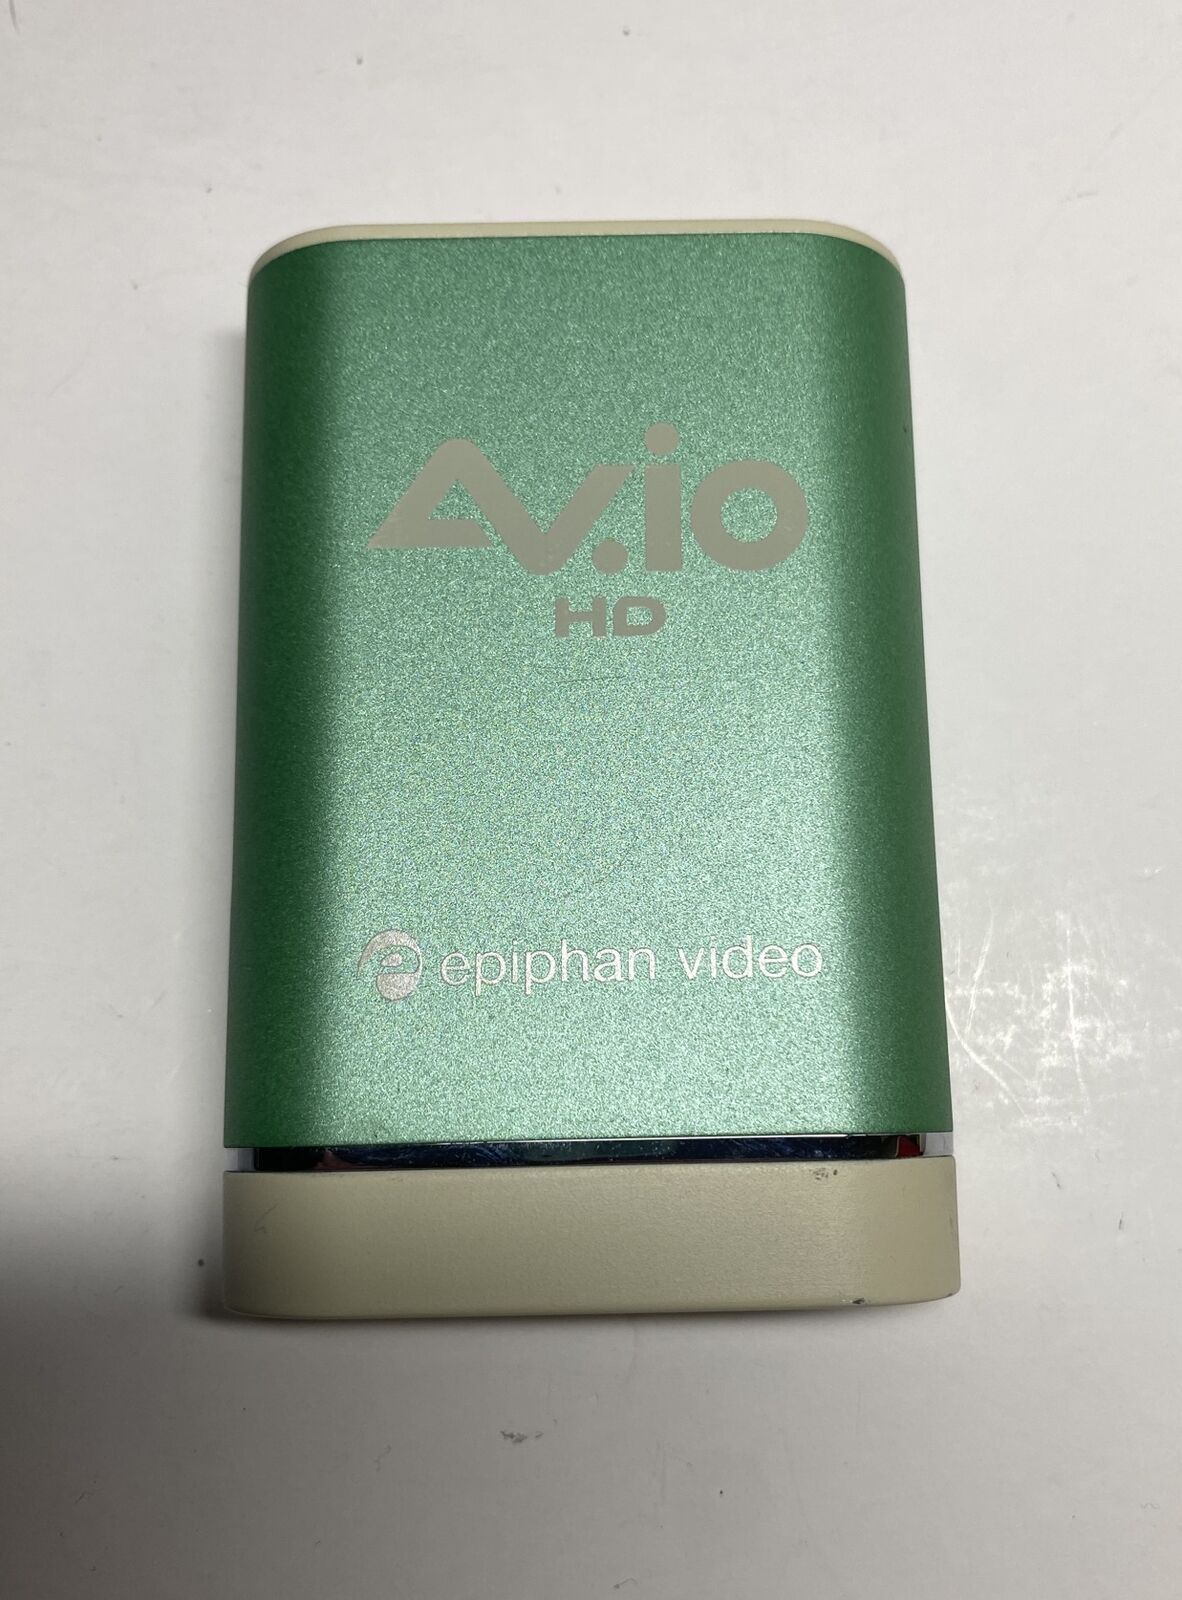 Epiphan AV.io HD USB Video Capture Card - 1080p 60fps HDMI/DVI/VGA